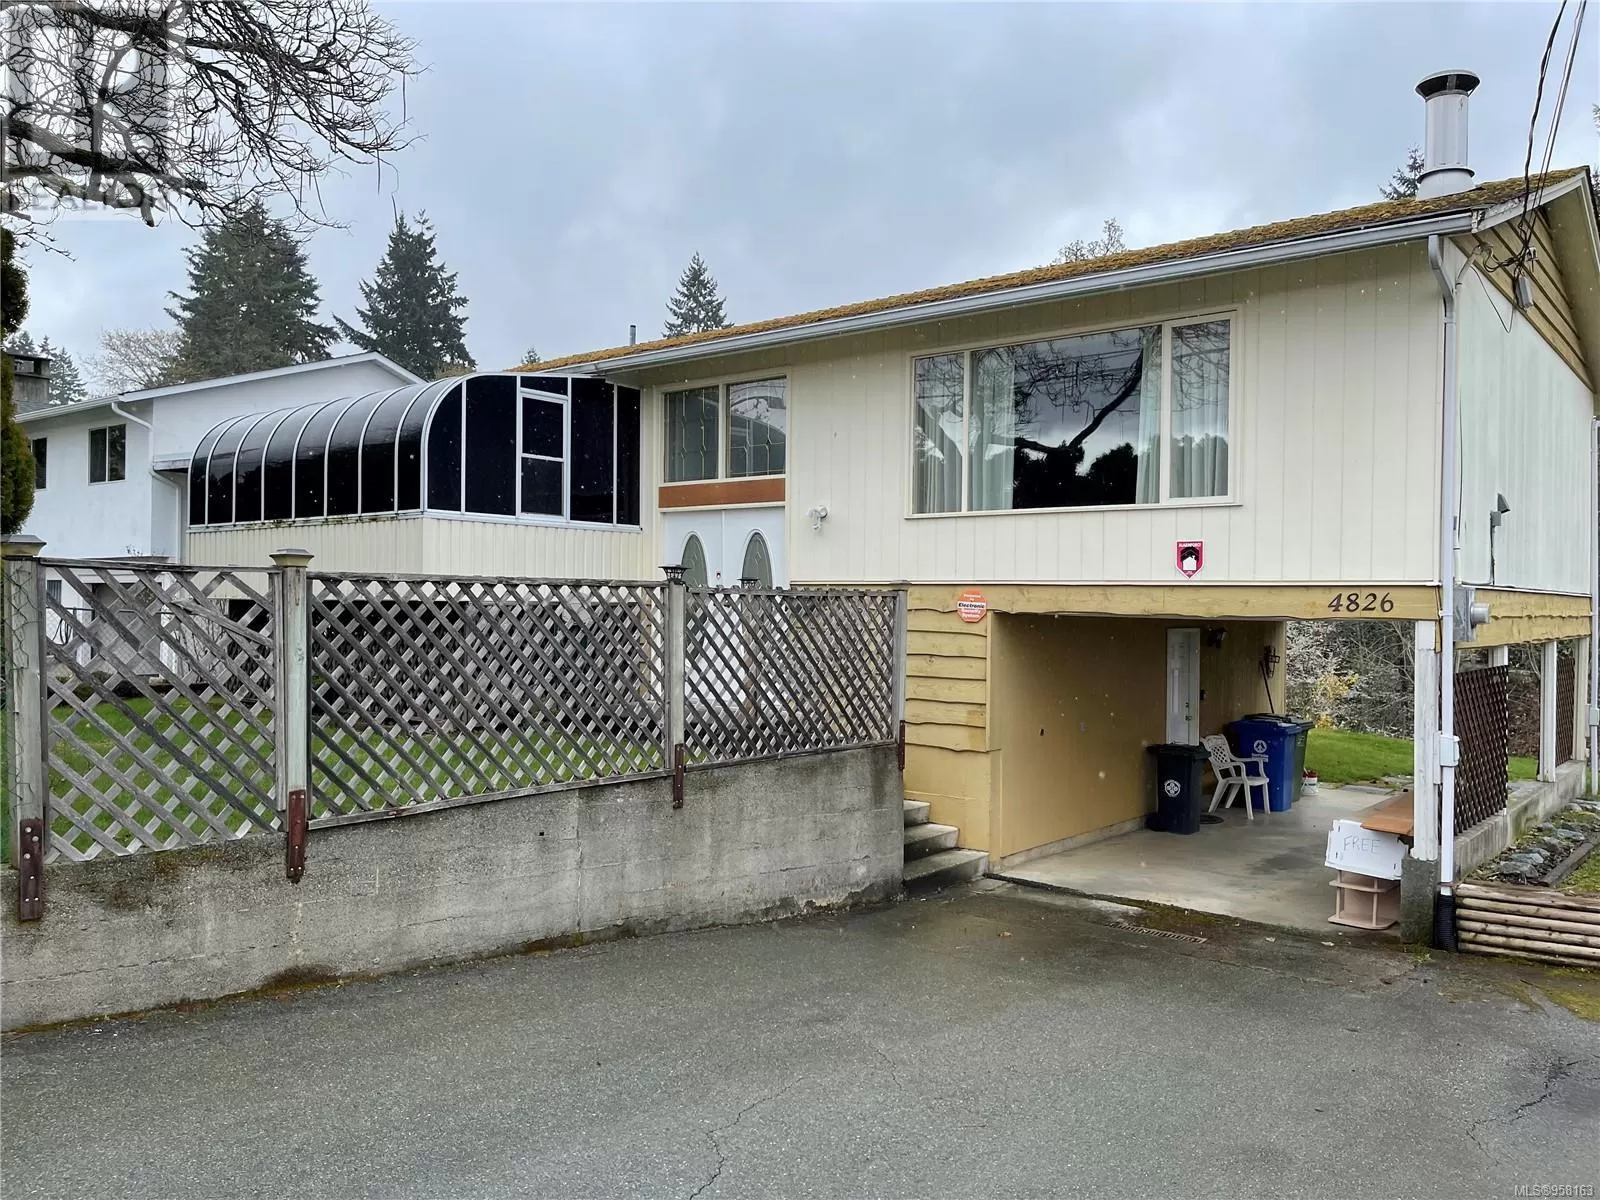 House for rent: 4826 Bruce St, Port Alberni, British Columbia V9Y 1G9